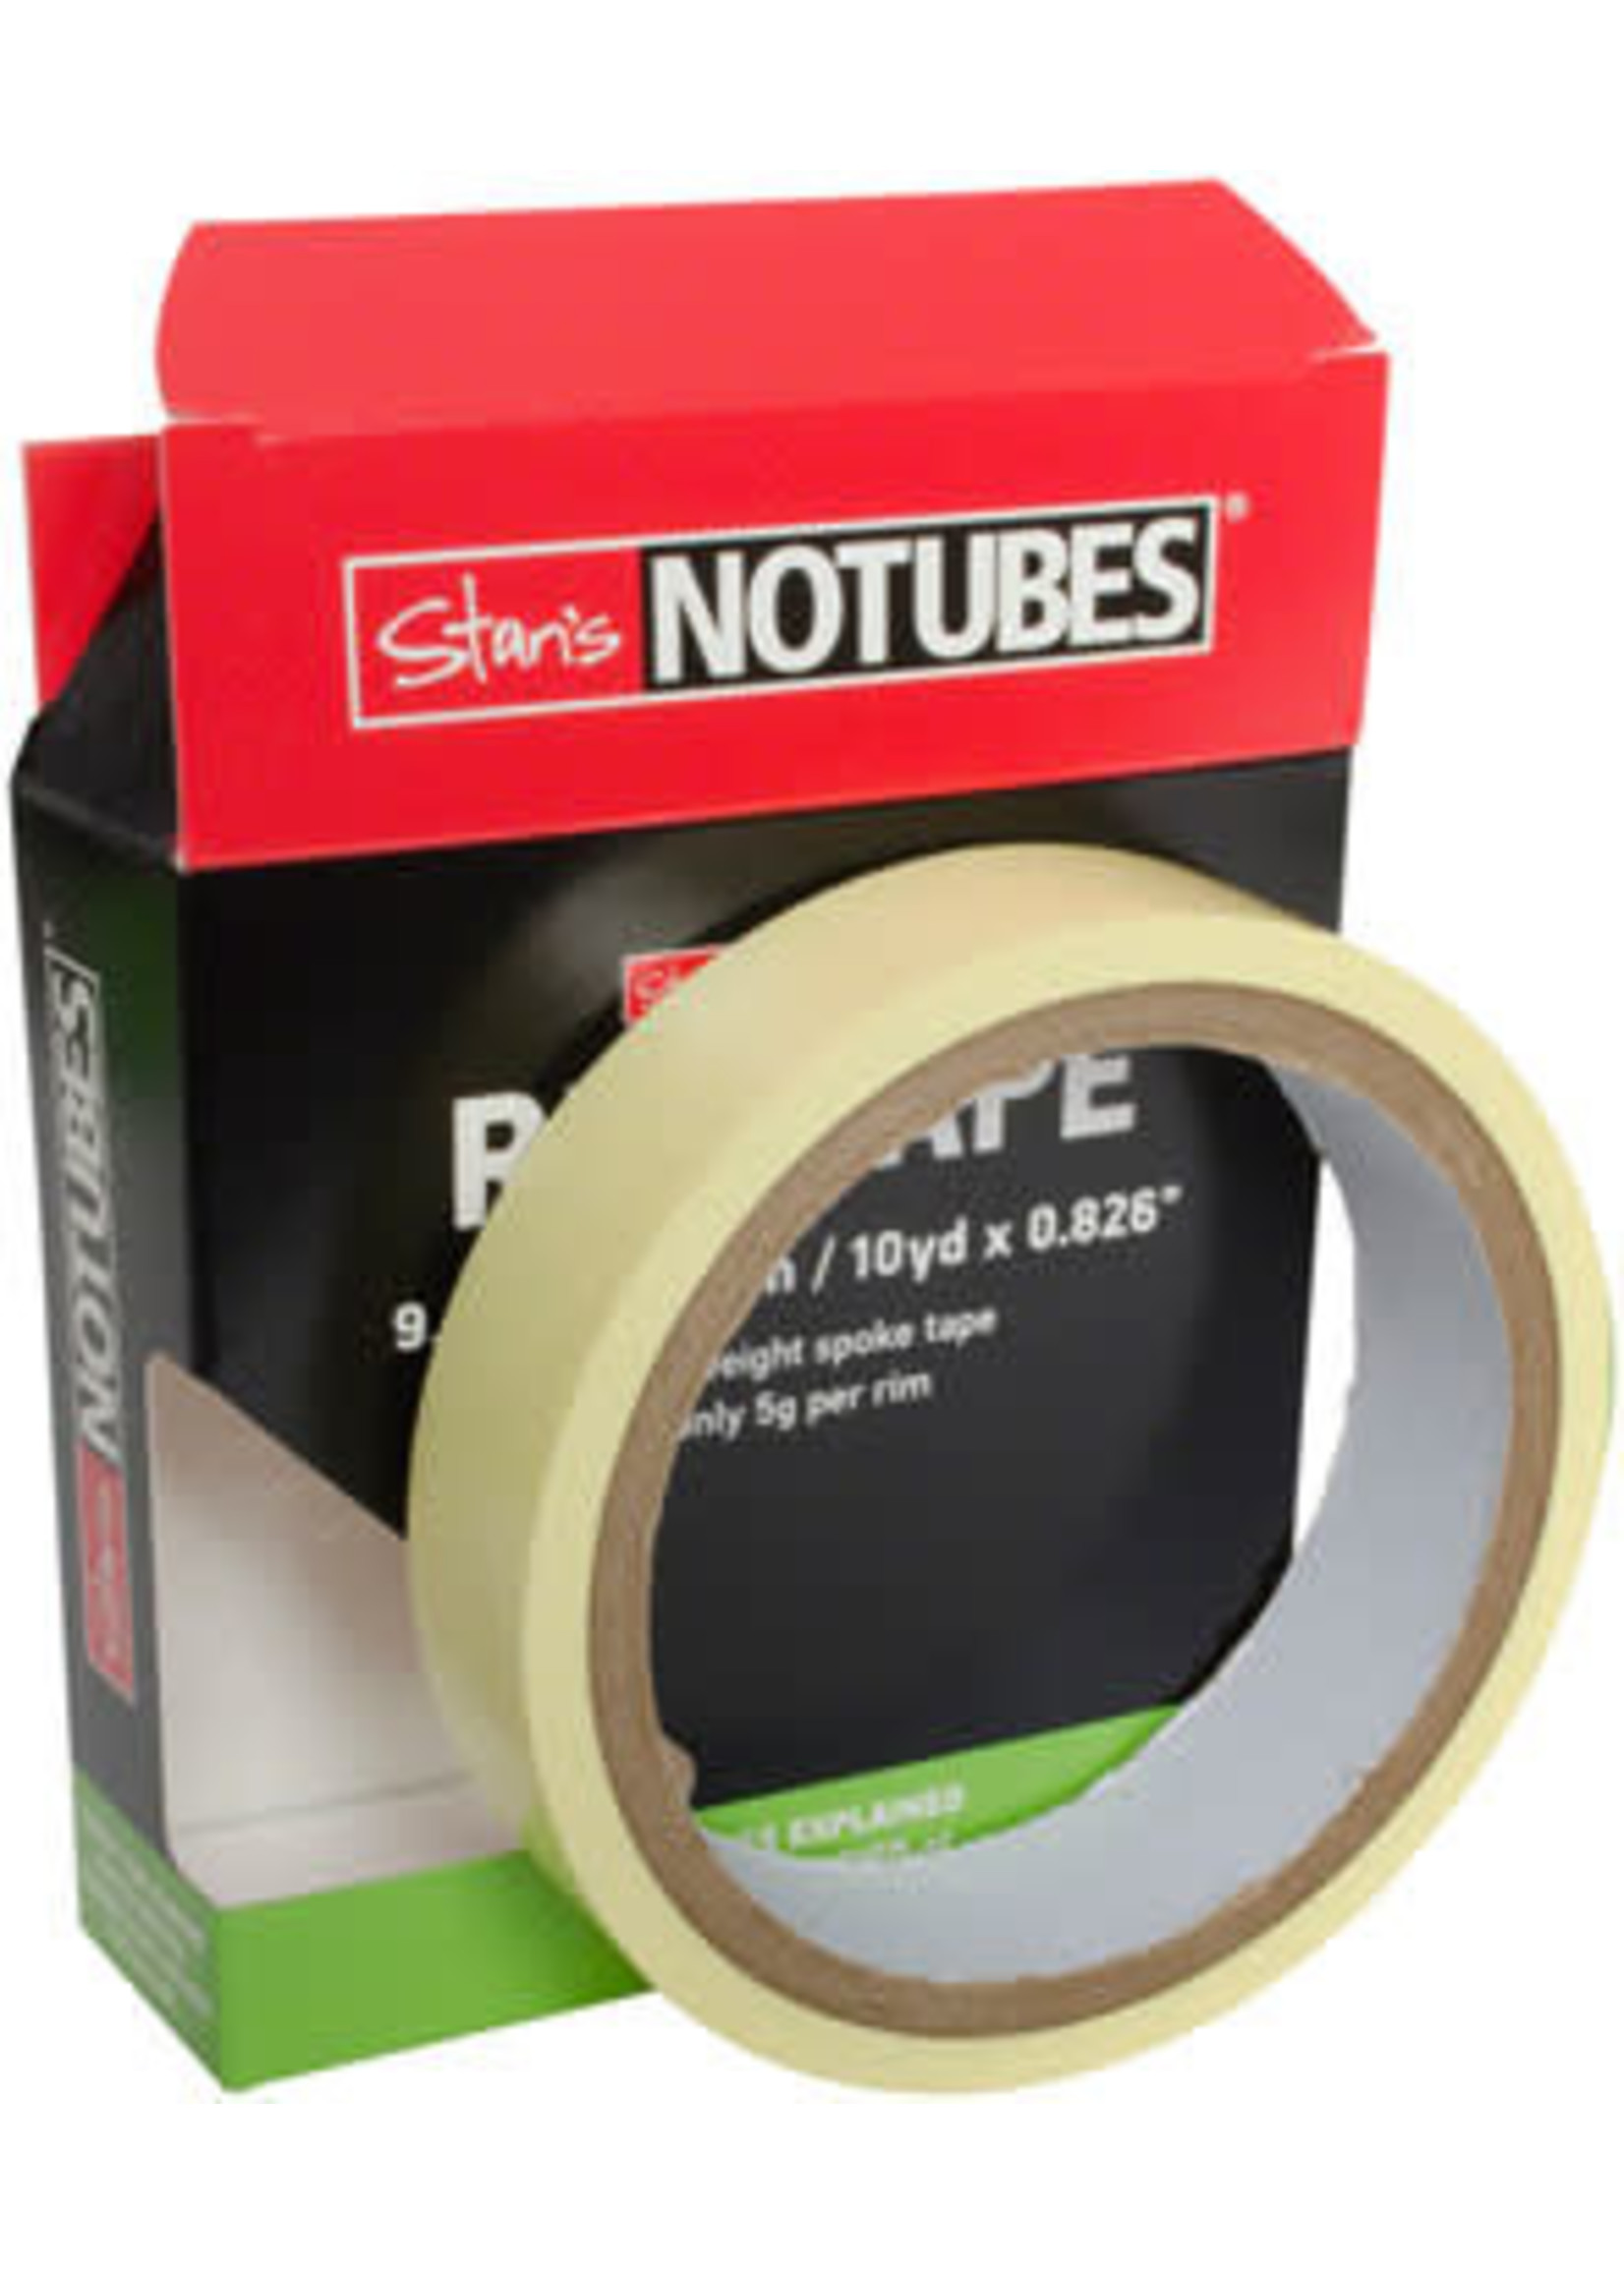 Stan's No-Tubes Stan's NoTubes Rim Tape: 36mm x 10 yard roll